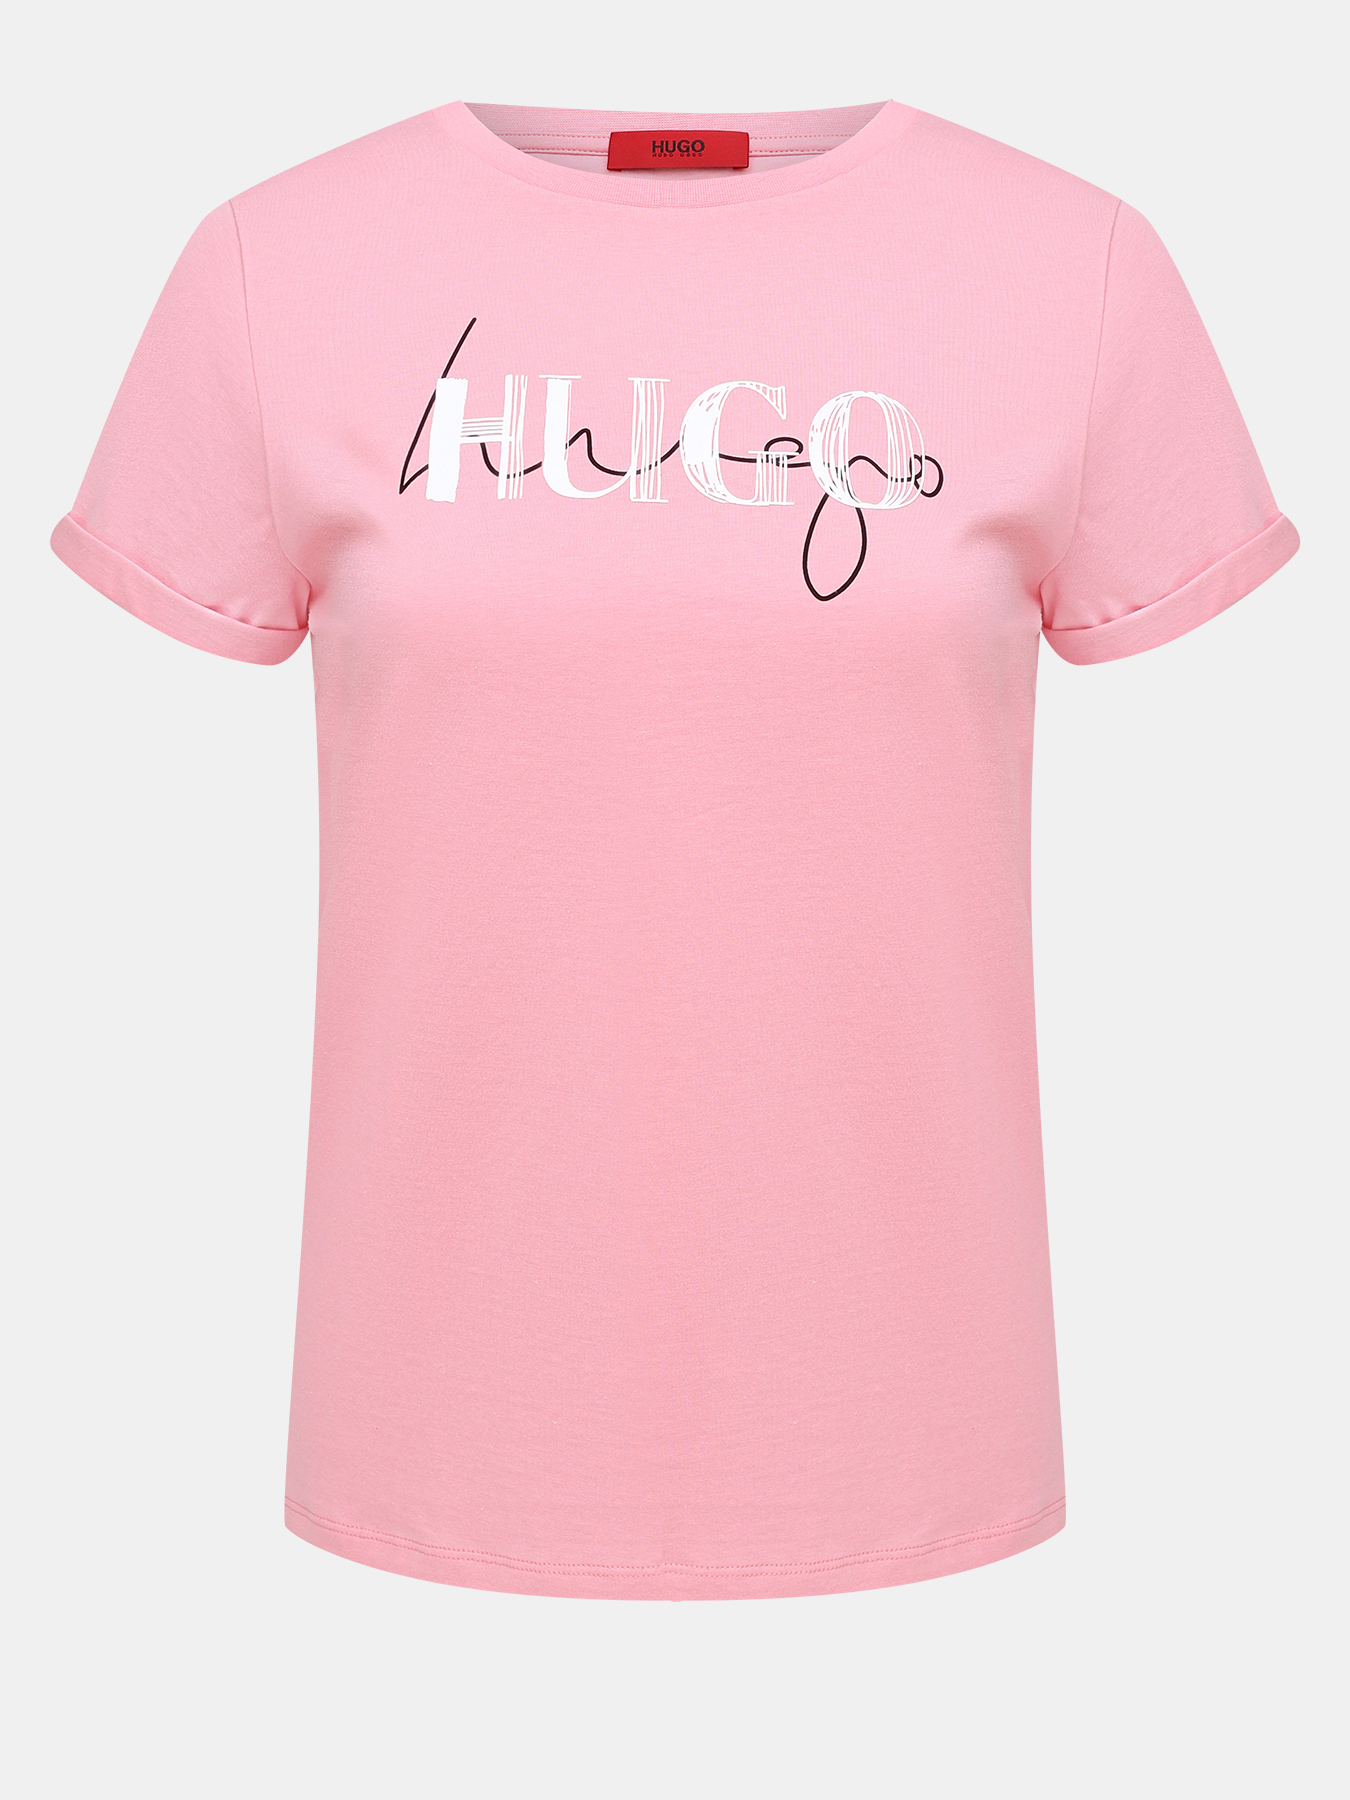 Hugo розовый. Hugo Boss футболка Tee. Футболка Hugo Boss женская. Розовая футболка Хьюго босс женская. Футболка Hugo Boss женская розовая.